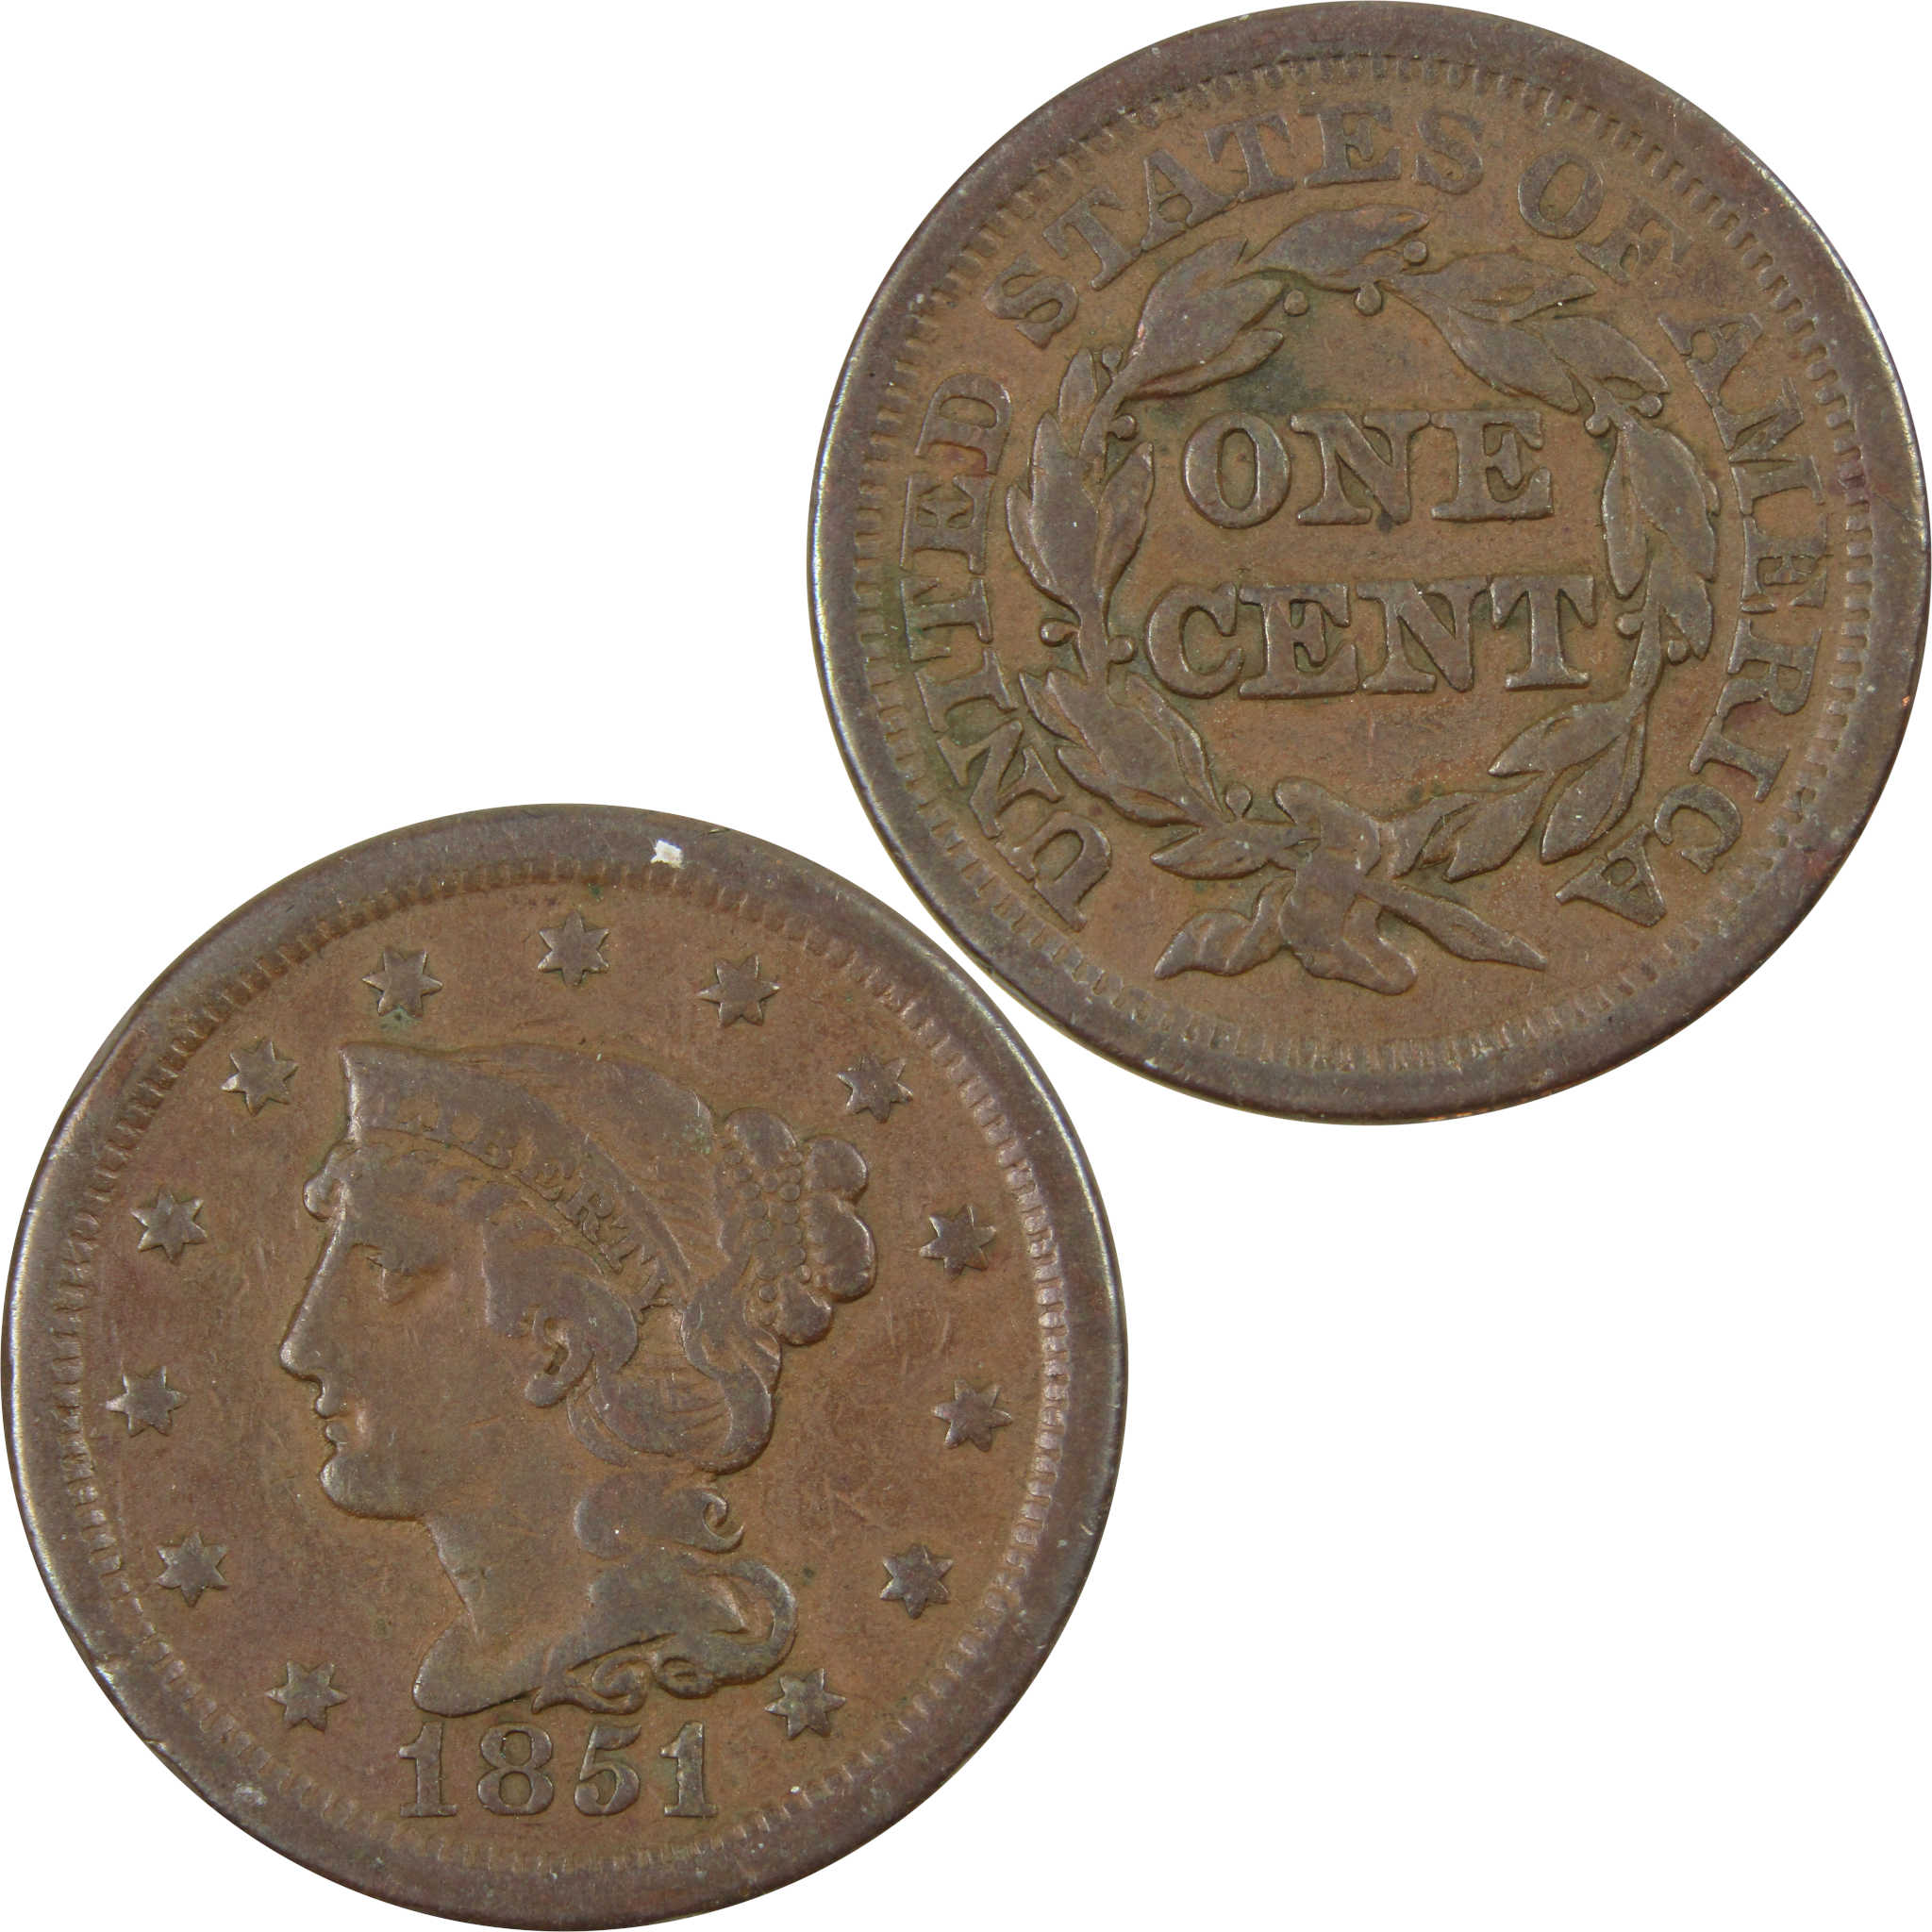 1851 BRAIDED HAIR HALF CENT NICE DETAIL KEY TYPE COIN #3600